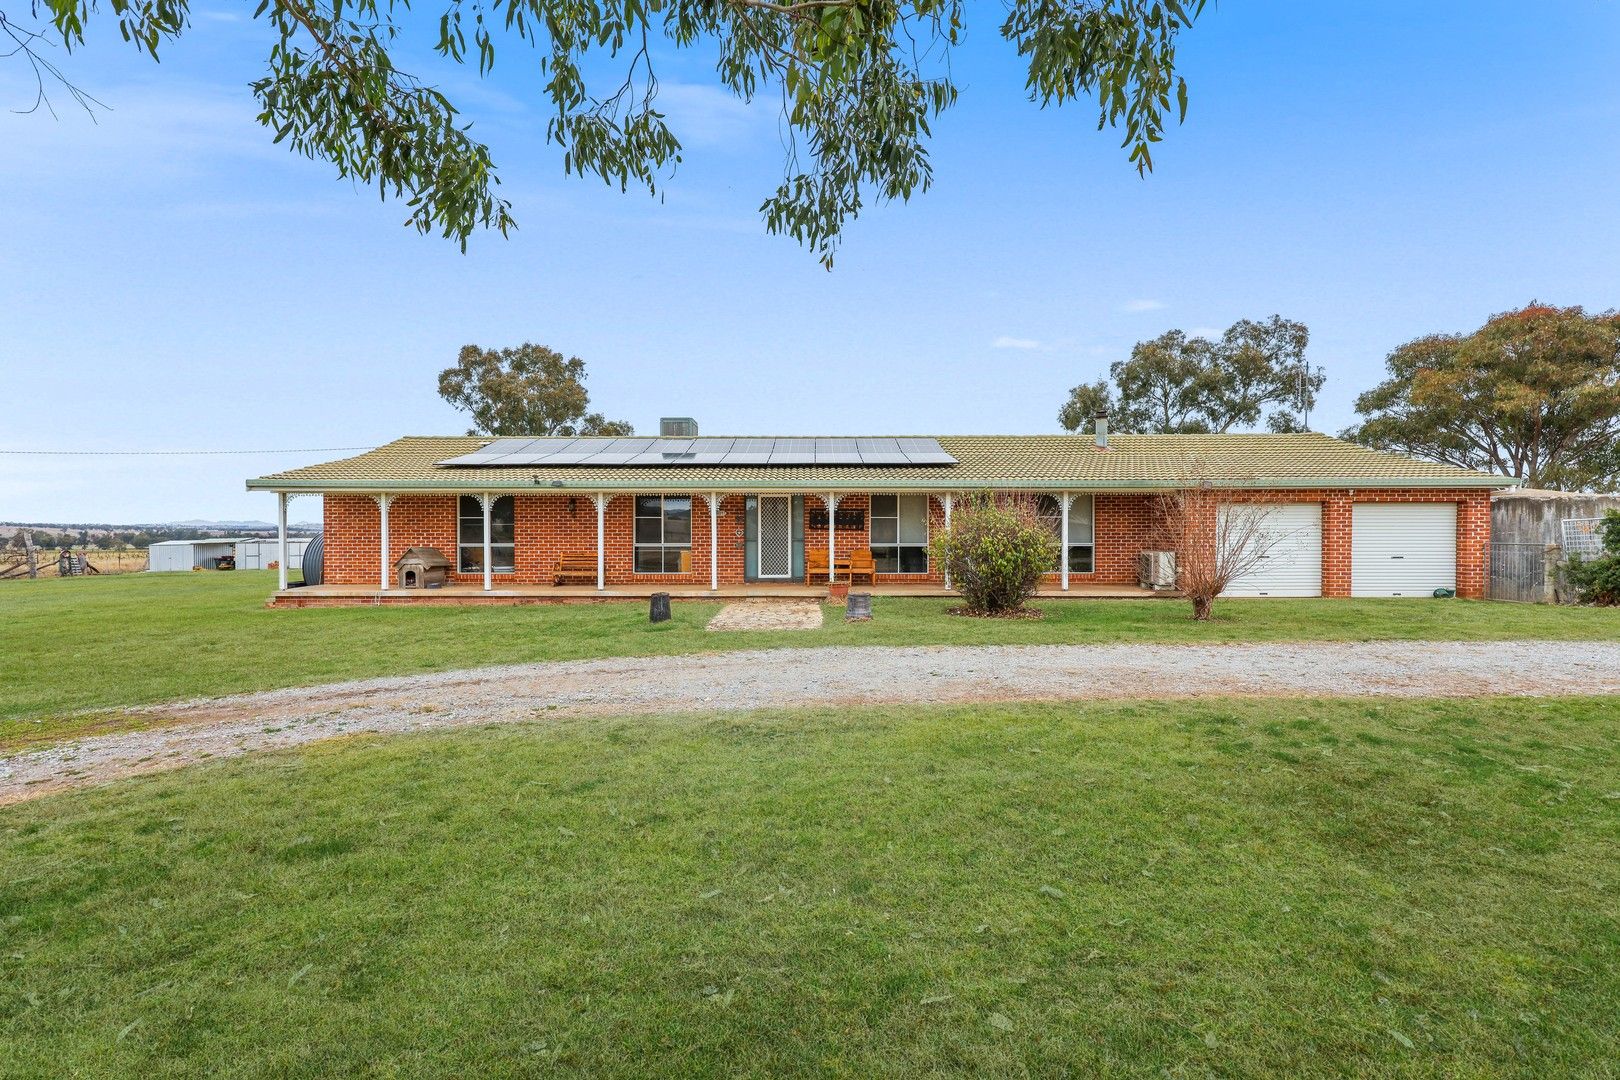 3 bedrooms Acreage / Semi-Rural in 227 Top Somerton Road TAMWORTH NSW, 2340